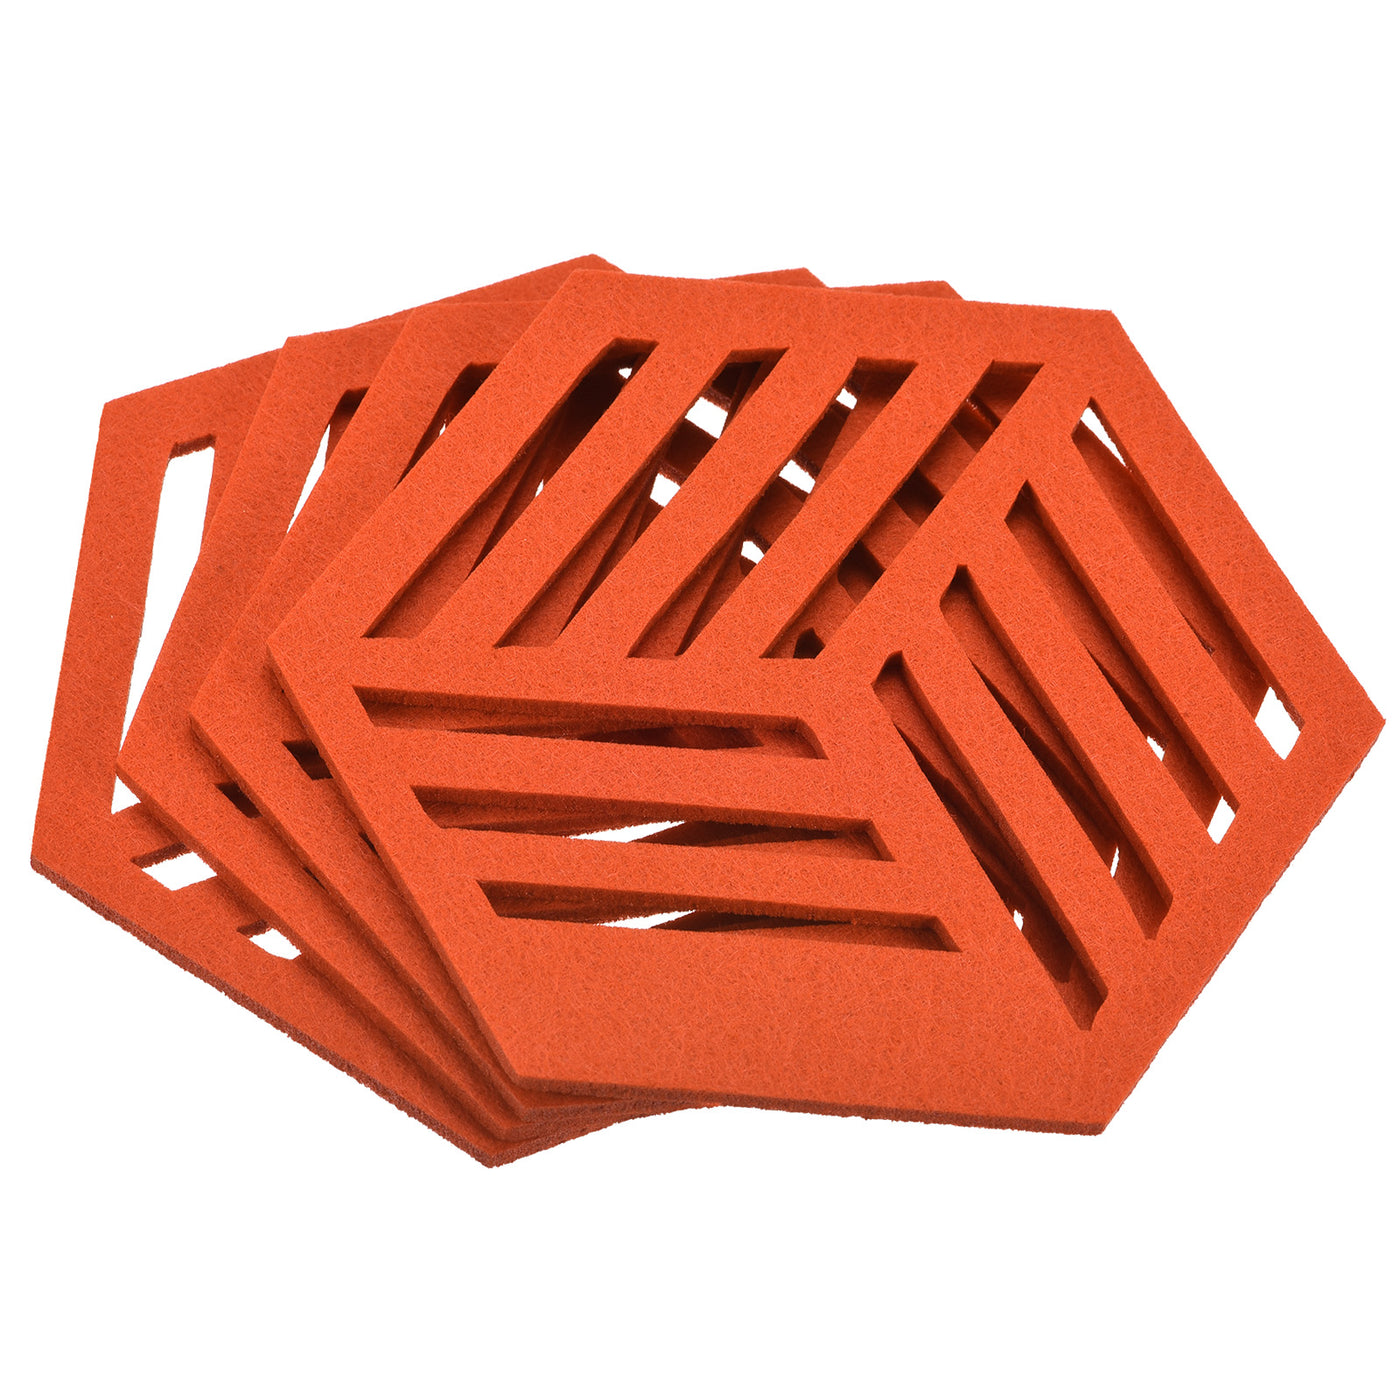 uxcell Uxcell Felt Coasters, 4pcs Hexagon Mat Pad Coaster for Drink Cup Pot Bowl Vase, Orange